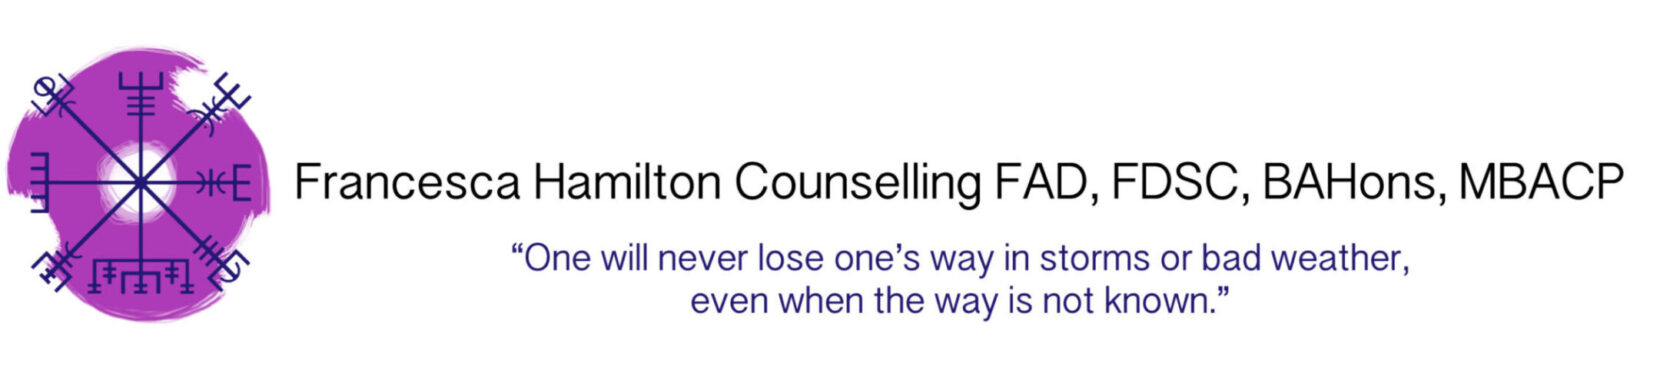 Francesca Hamilton Counselling